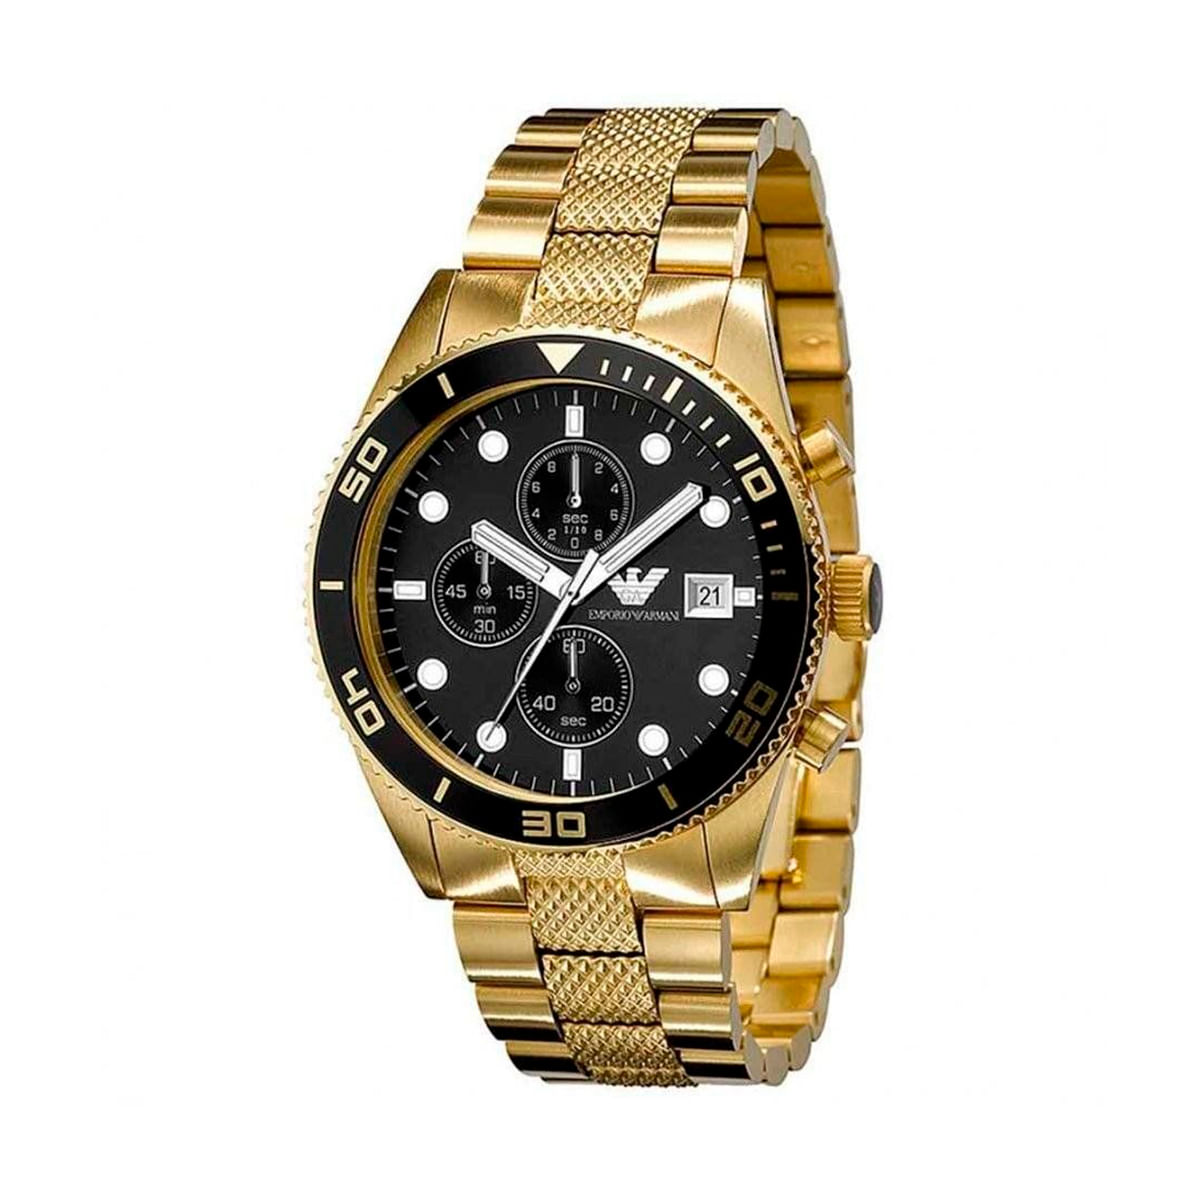 Reloj Emporio Armani AR5857 Gold and Black para Caballero